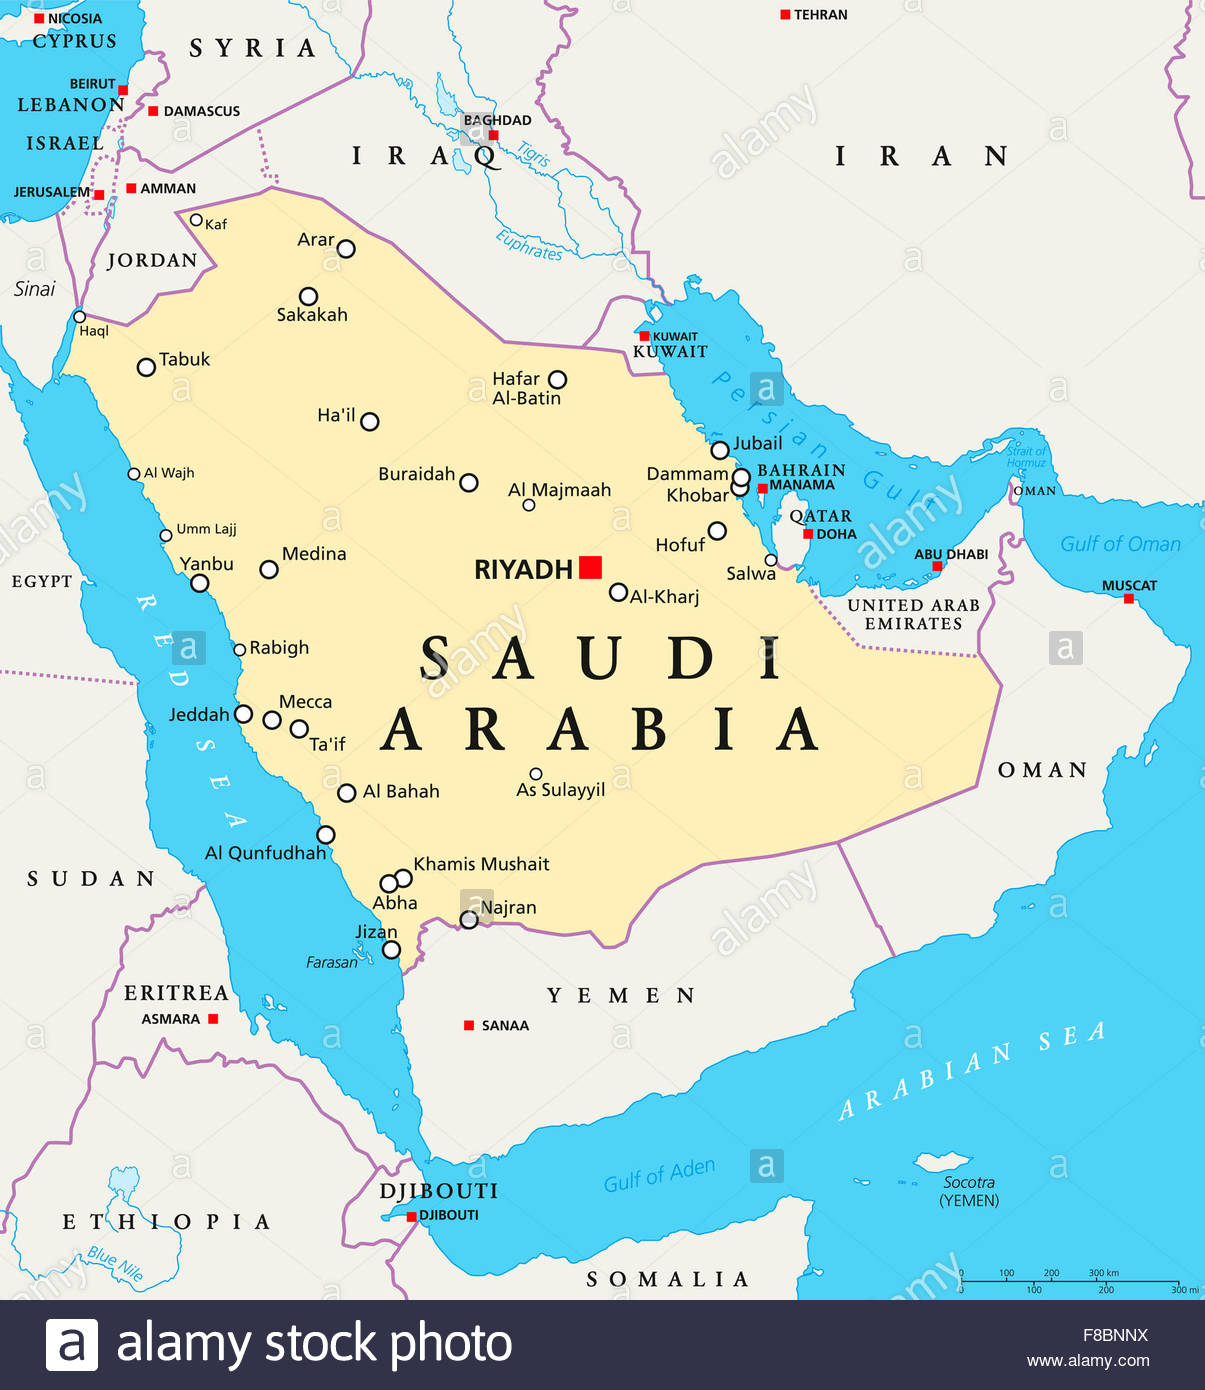 saudi-arabia-political-map-with-capital-riyadh-national-borders-and-F8BNNX.jpg